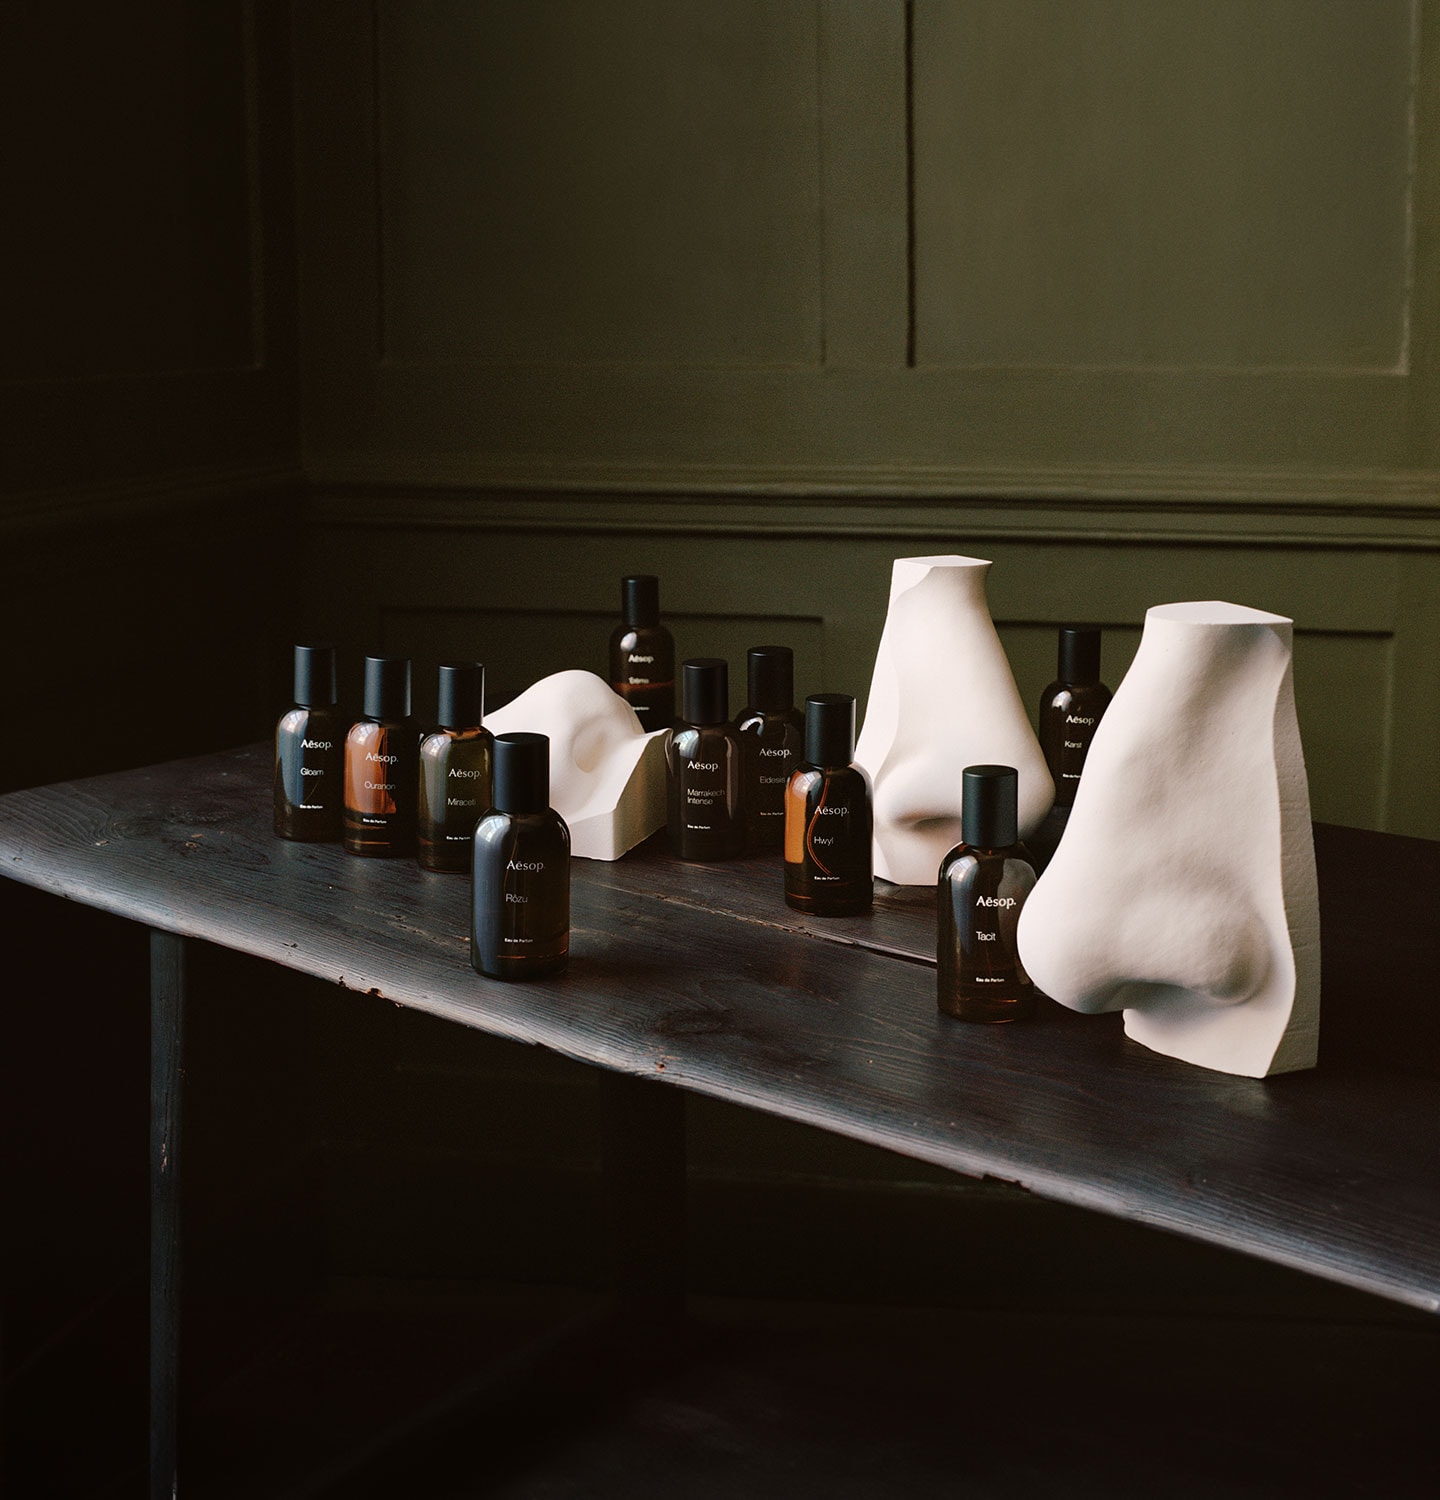 Aesop fragrances in amber bottles placed next to nose sculptures